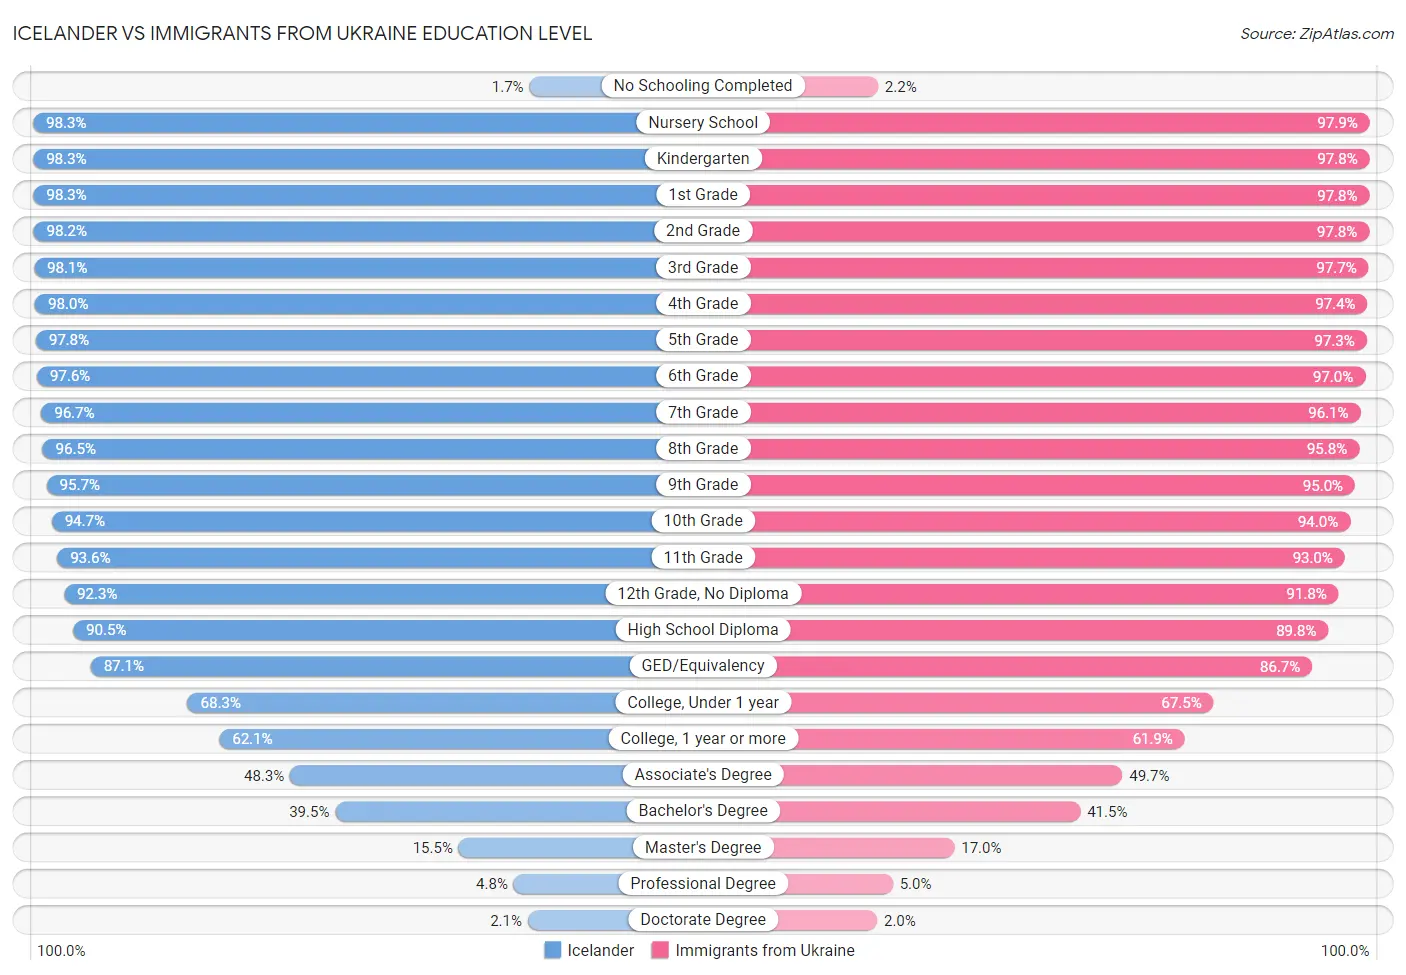 Icelander vs Immigrants from Ukraine Education Level